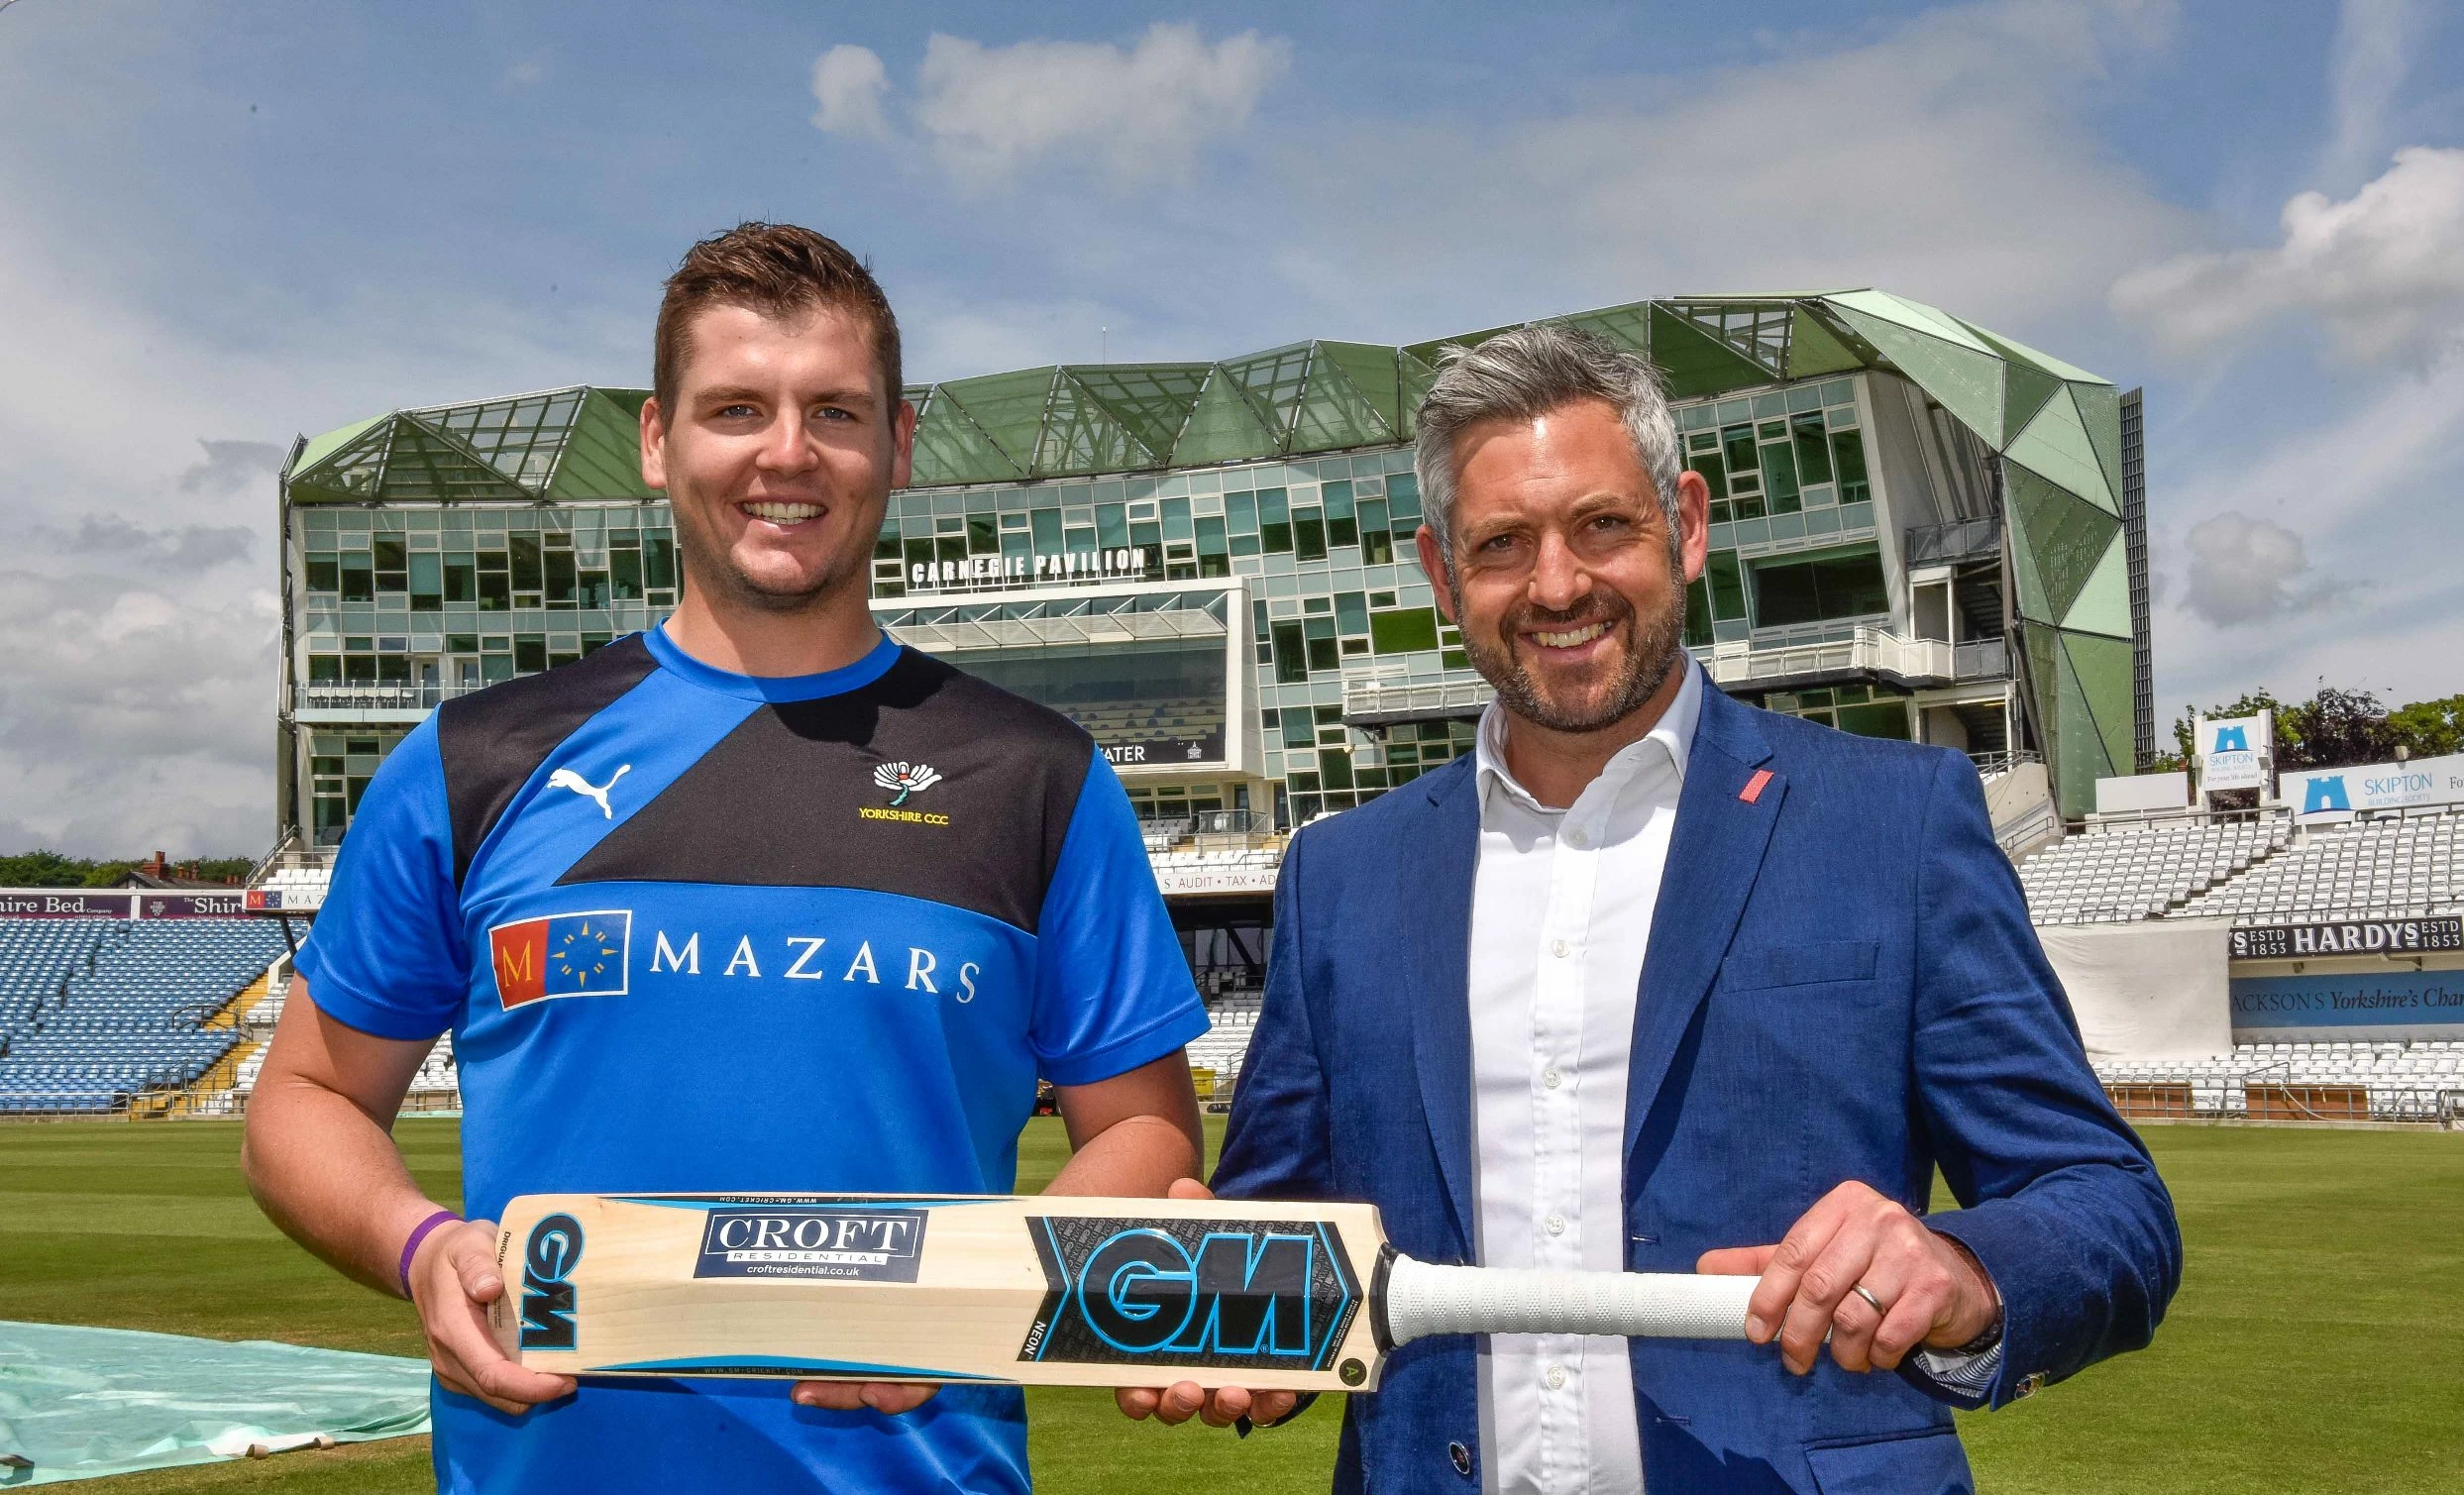 Alex Lees Yorkshire County Cricket Club batsman and Toby Cockcroft, Croft Residential